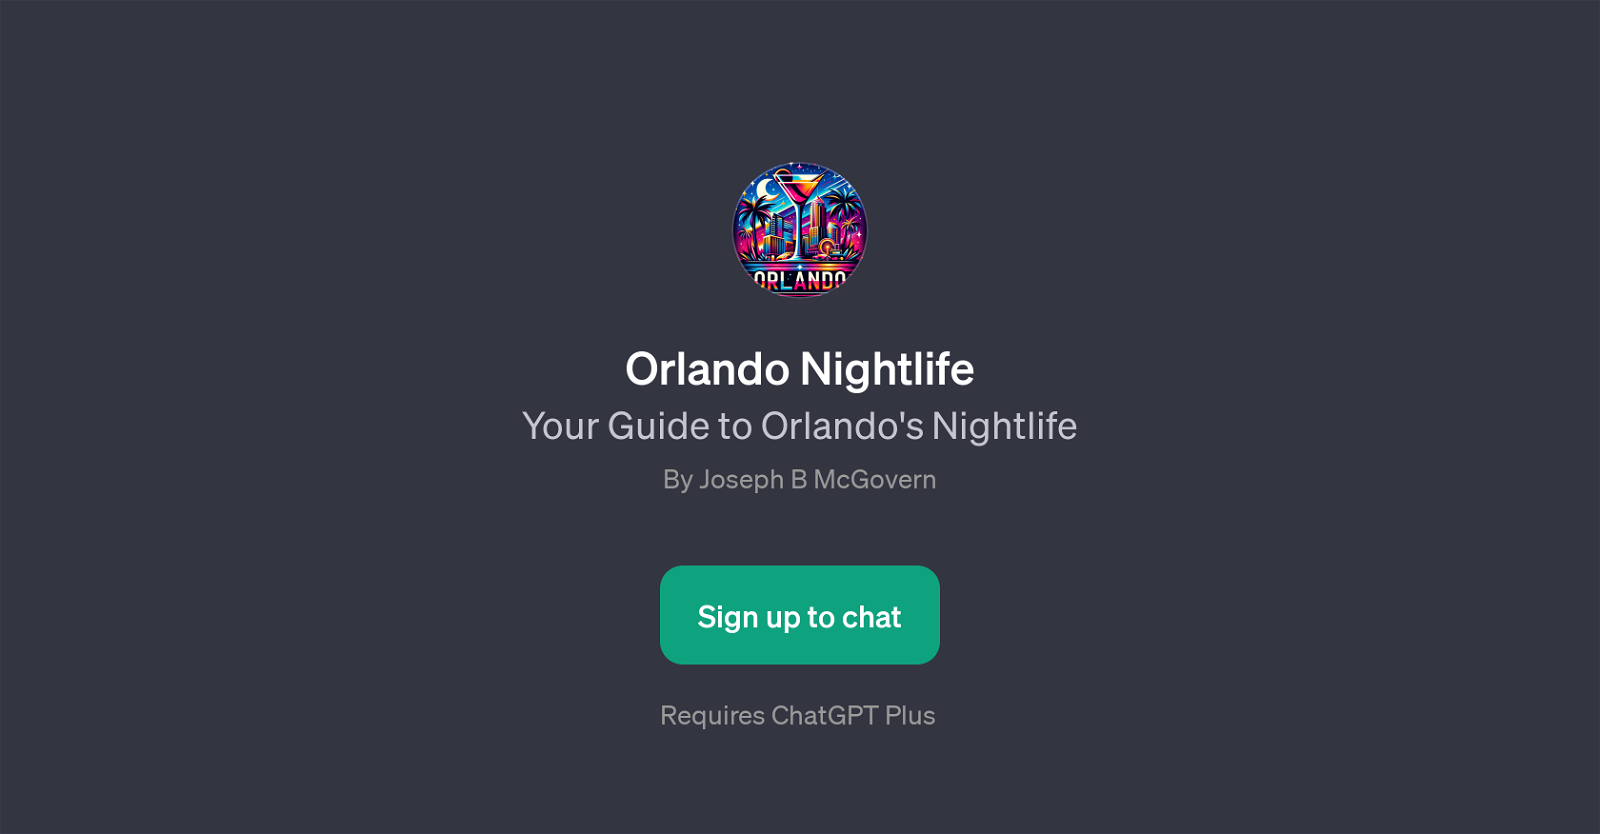 Orlando Nightlife website